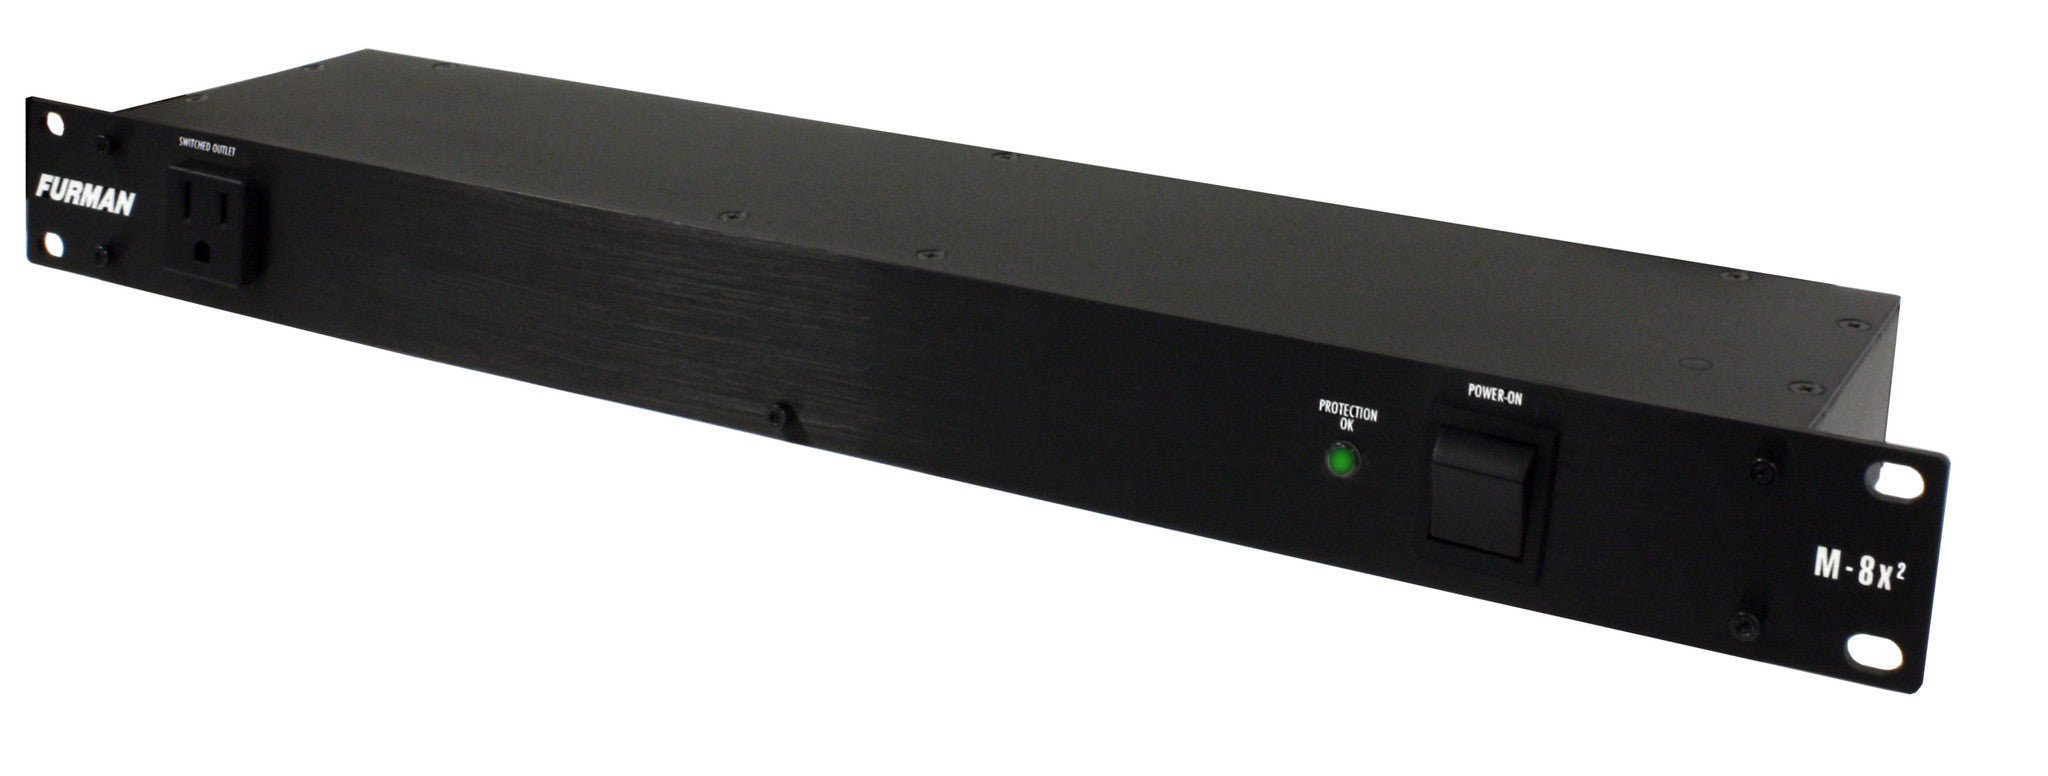 Furman Sound M-8X2 - Accessories - Professional Audio Design, Inc